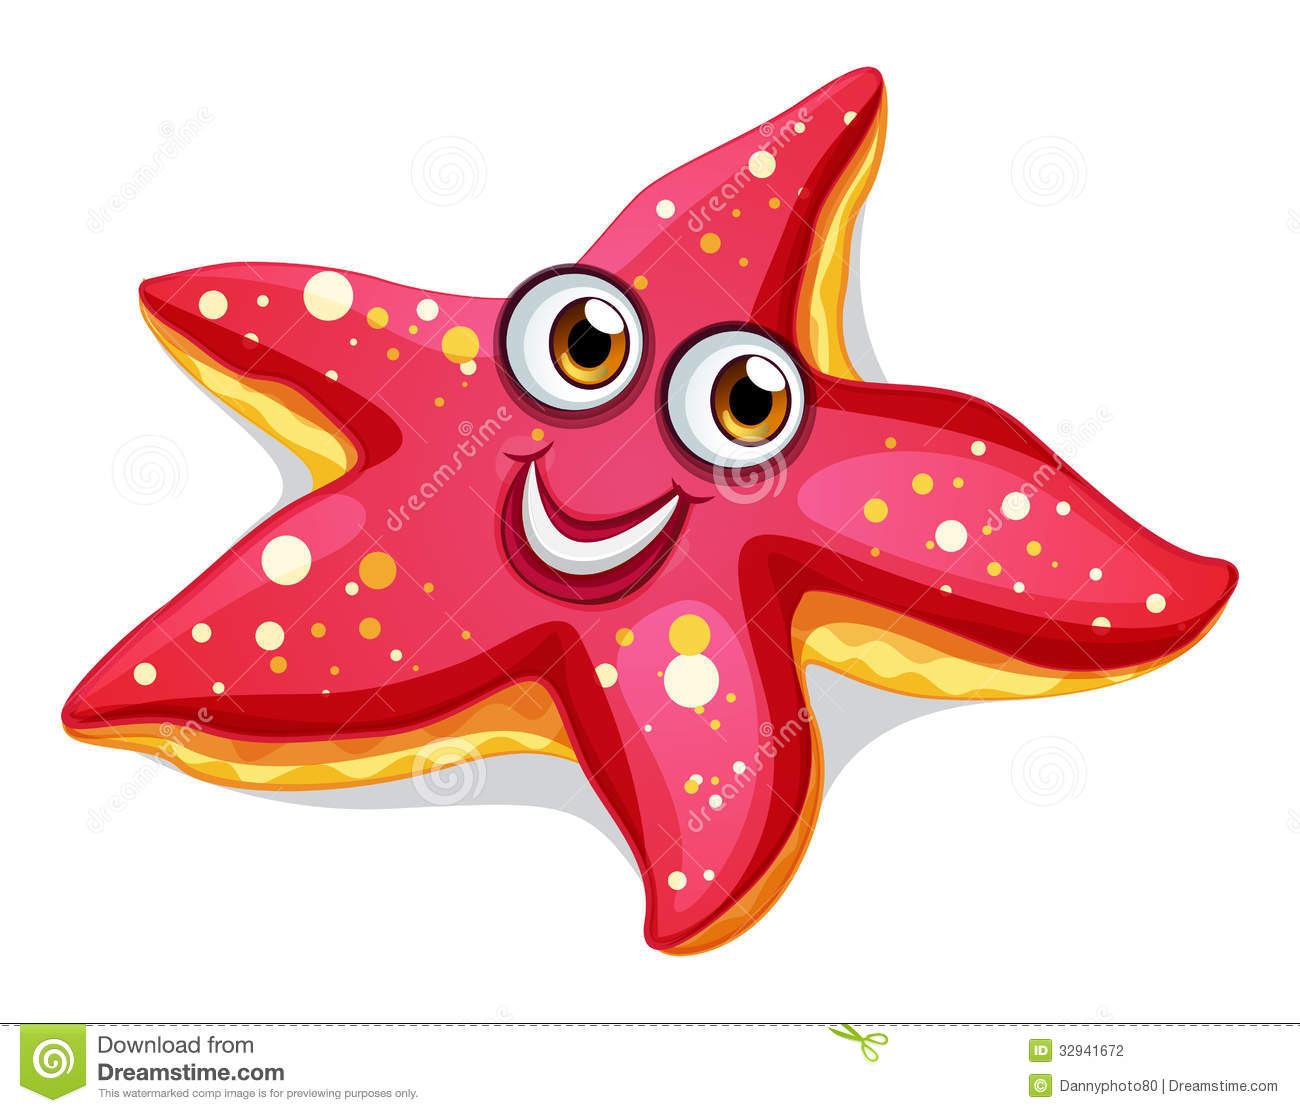 Starfish clip art web clipart